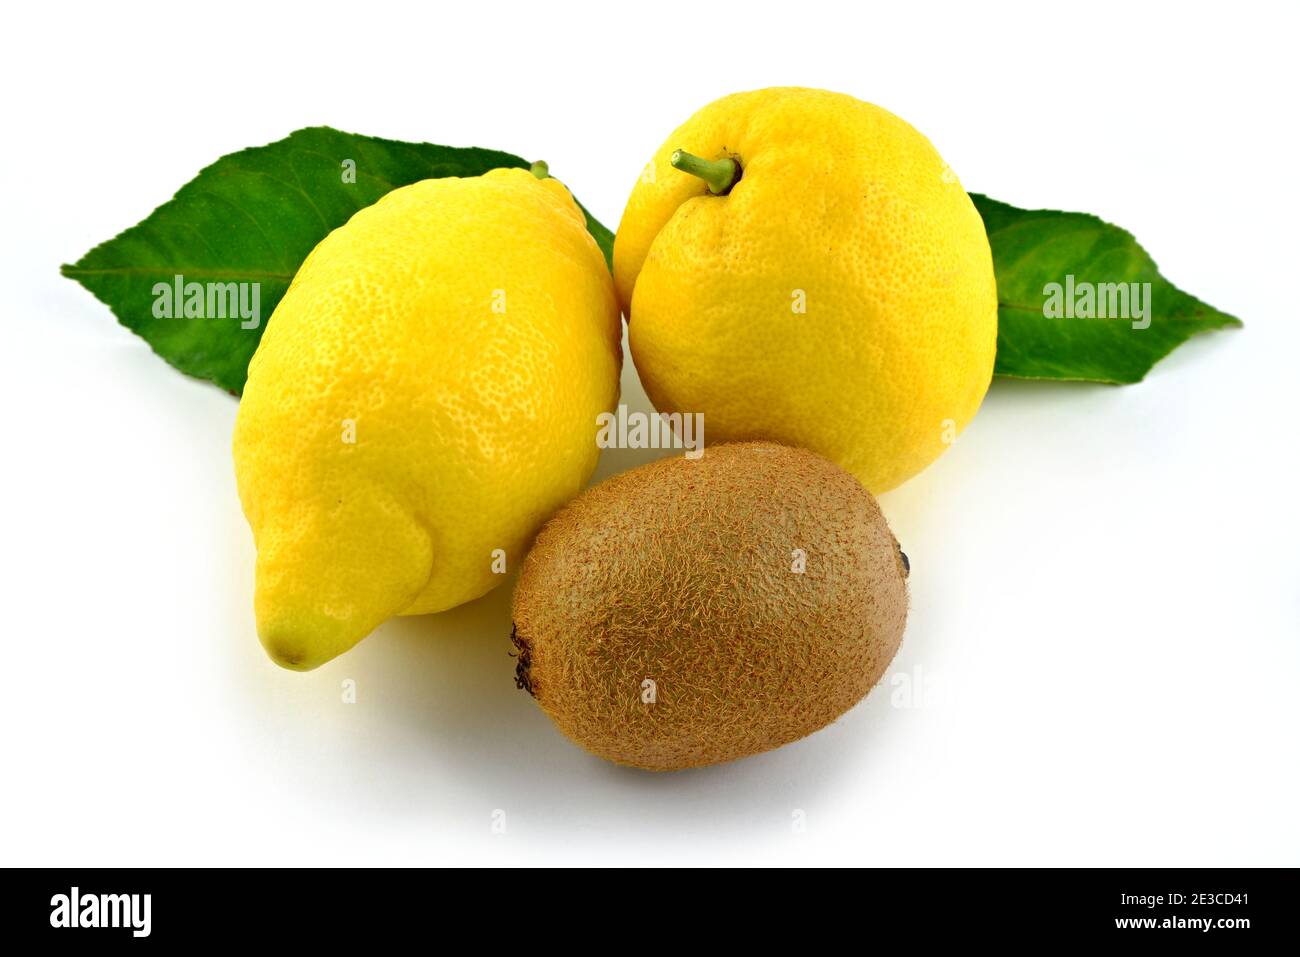 Mix of fruits, two yellow lemons, one brown kiwi. Green lemon leaves. Stock Photo